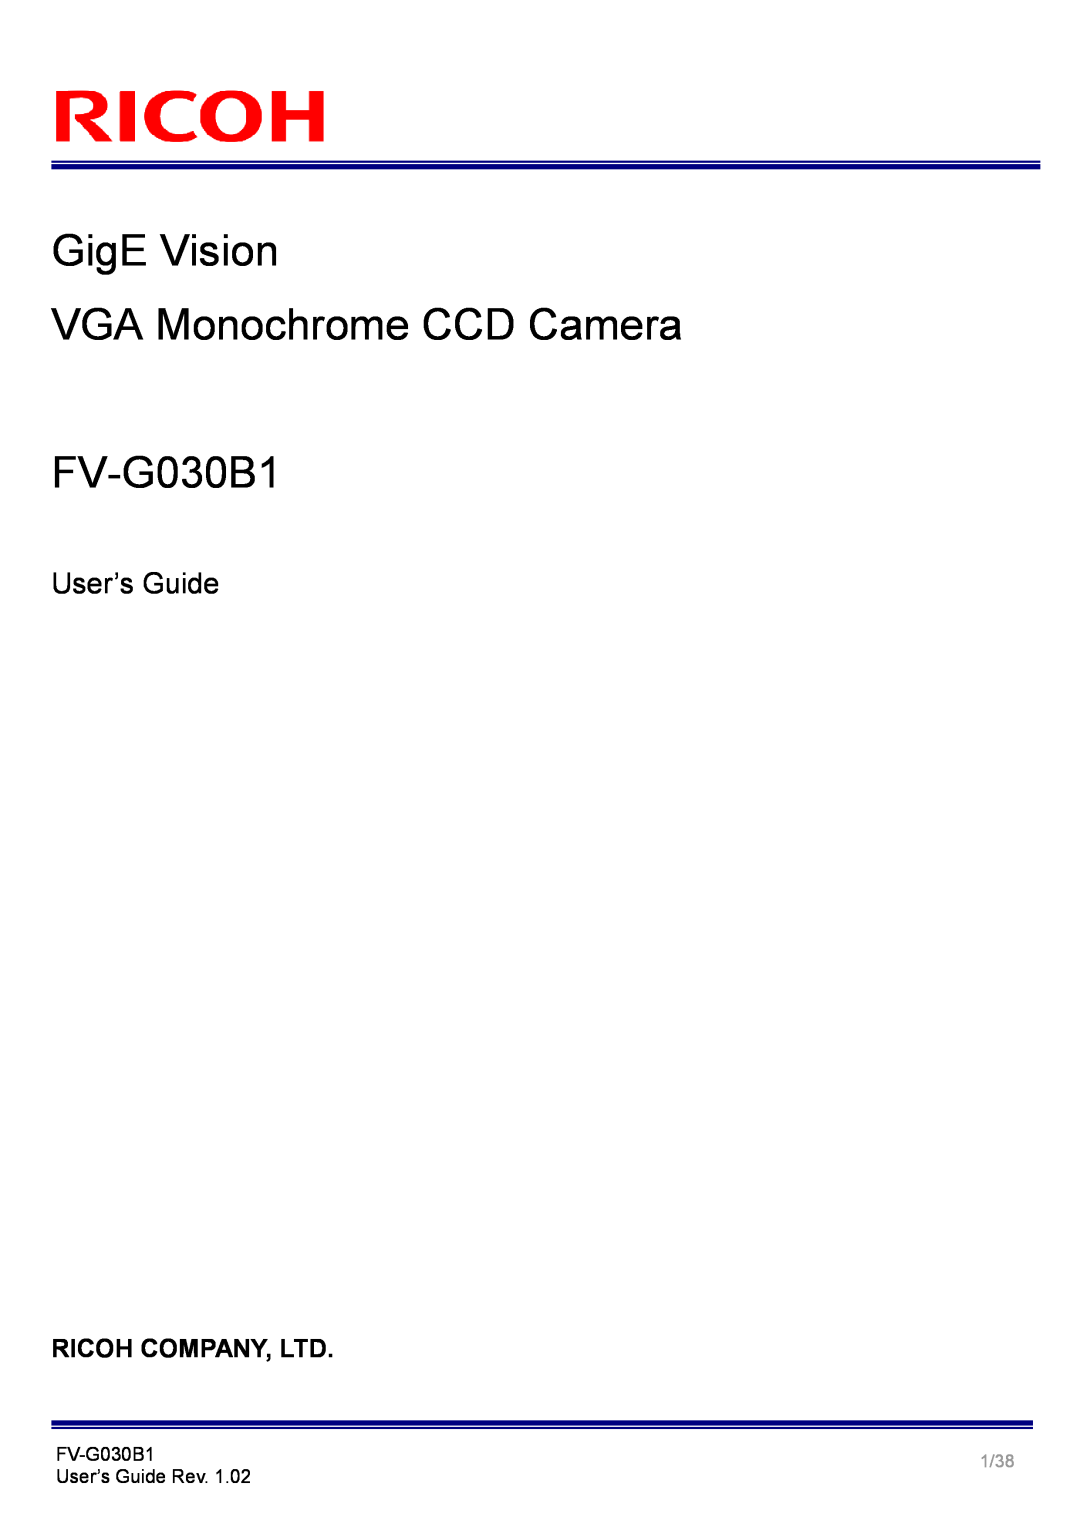 Ricoh manual GigE Vision VGA Monochrome CCD Camera FV-G030B1, User’s Guide, 1/38 